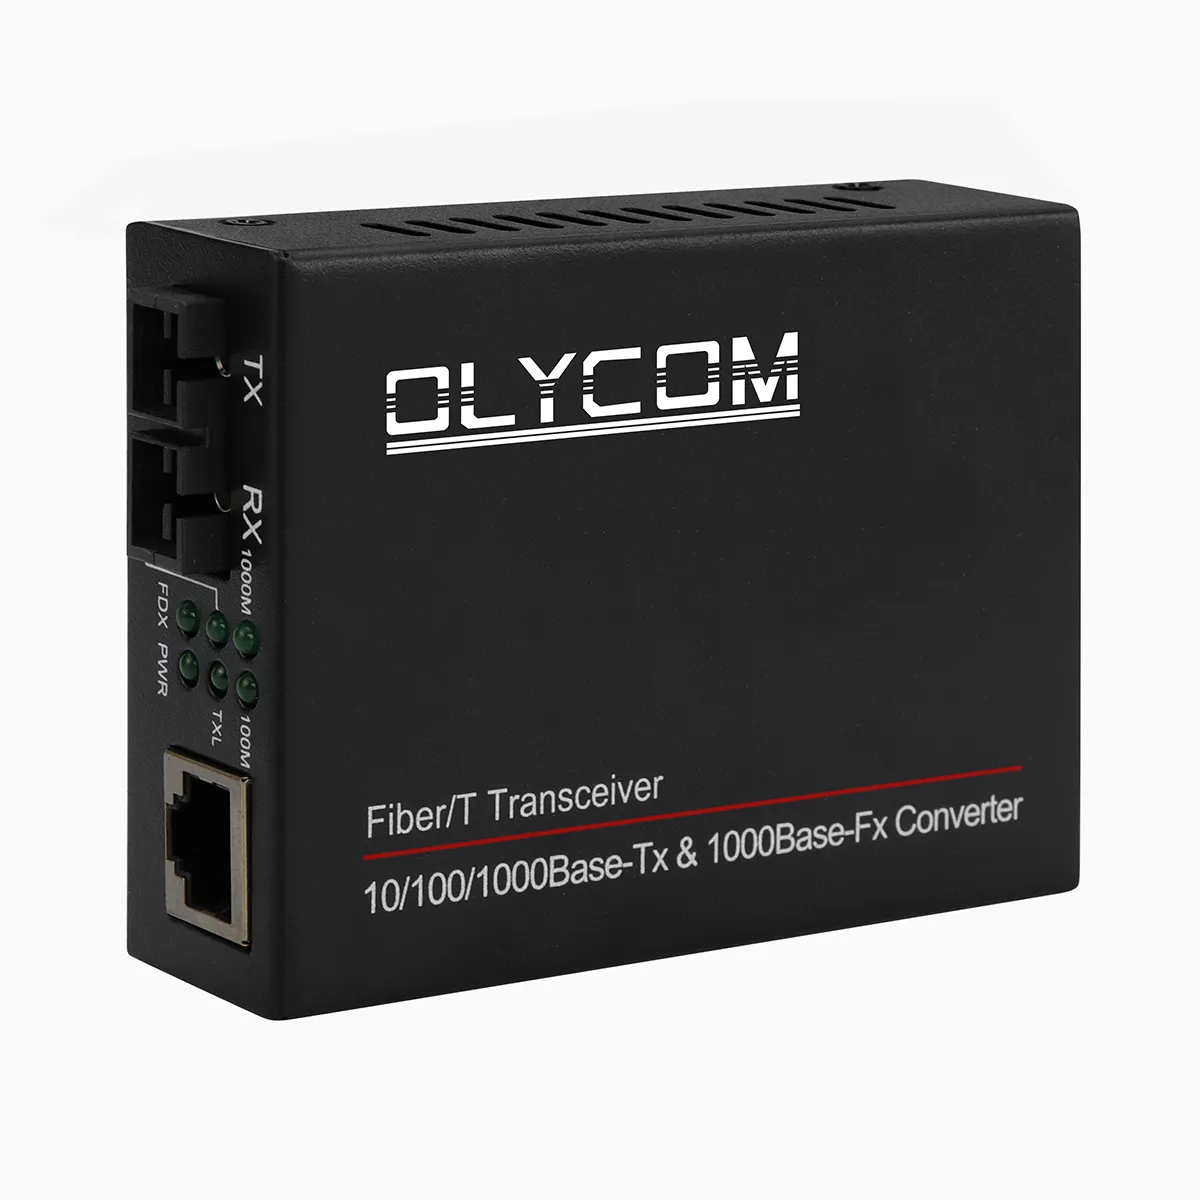 10/100/1000 Base-TX and 1000Base-FX ethernet fiber optic converter